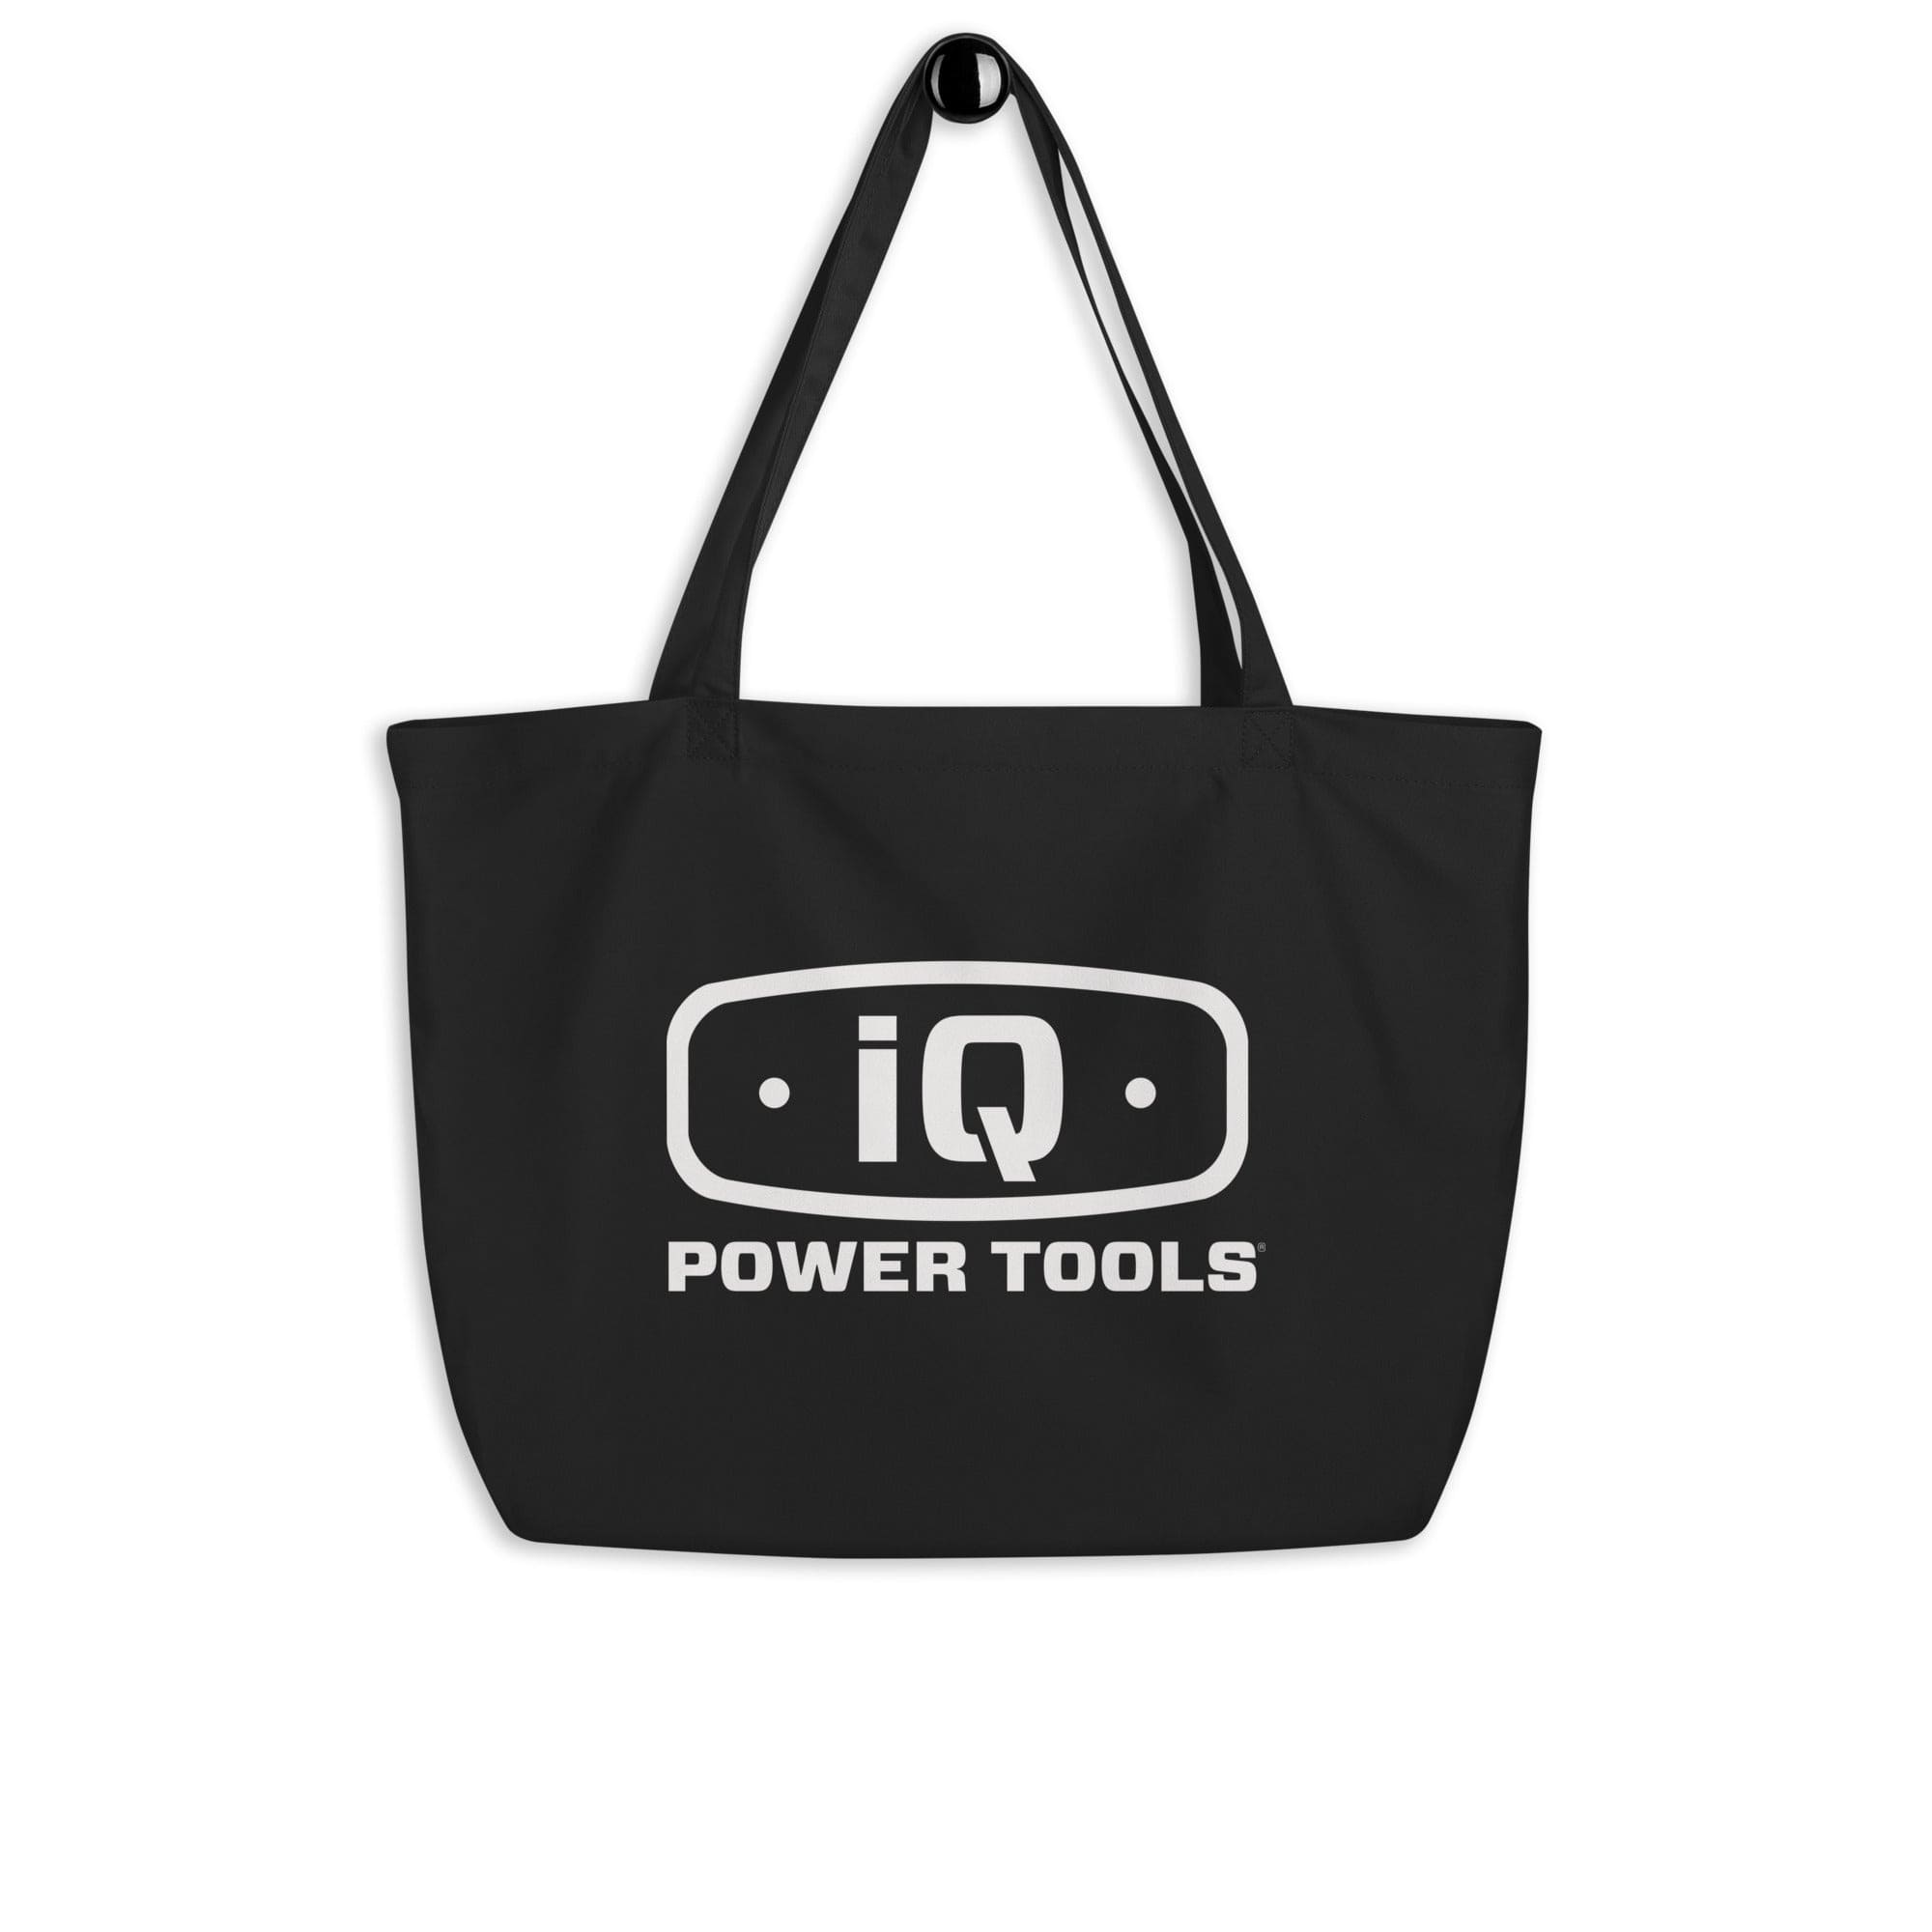 iQ Power Tools - Large organic tote bag